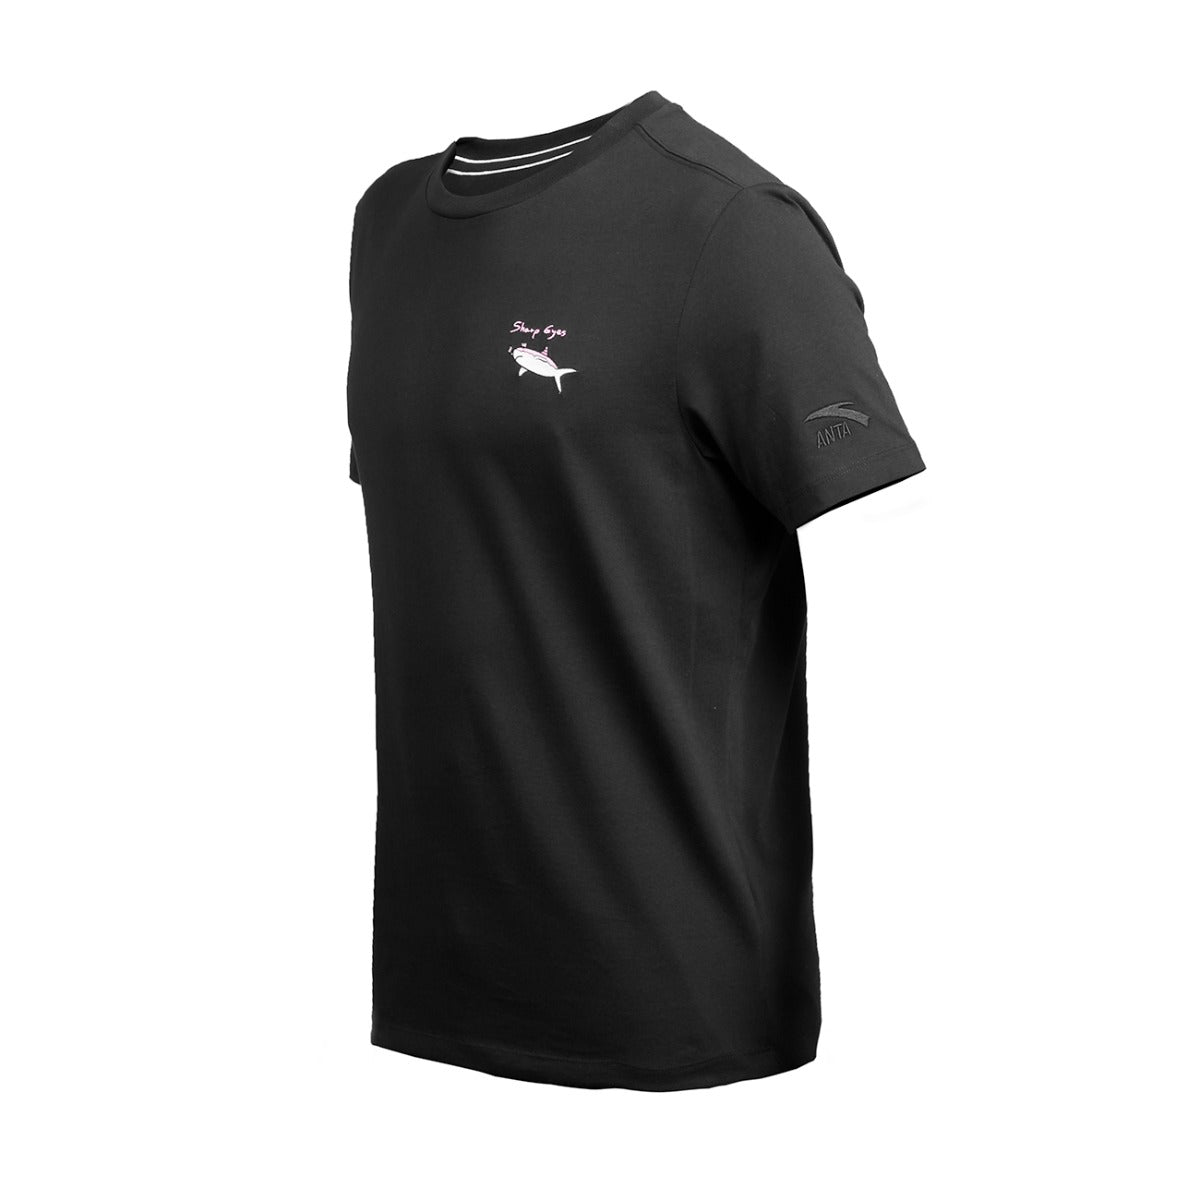 Anta SS Tee Lifestyle T-Shirt For Men, Black